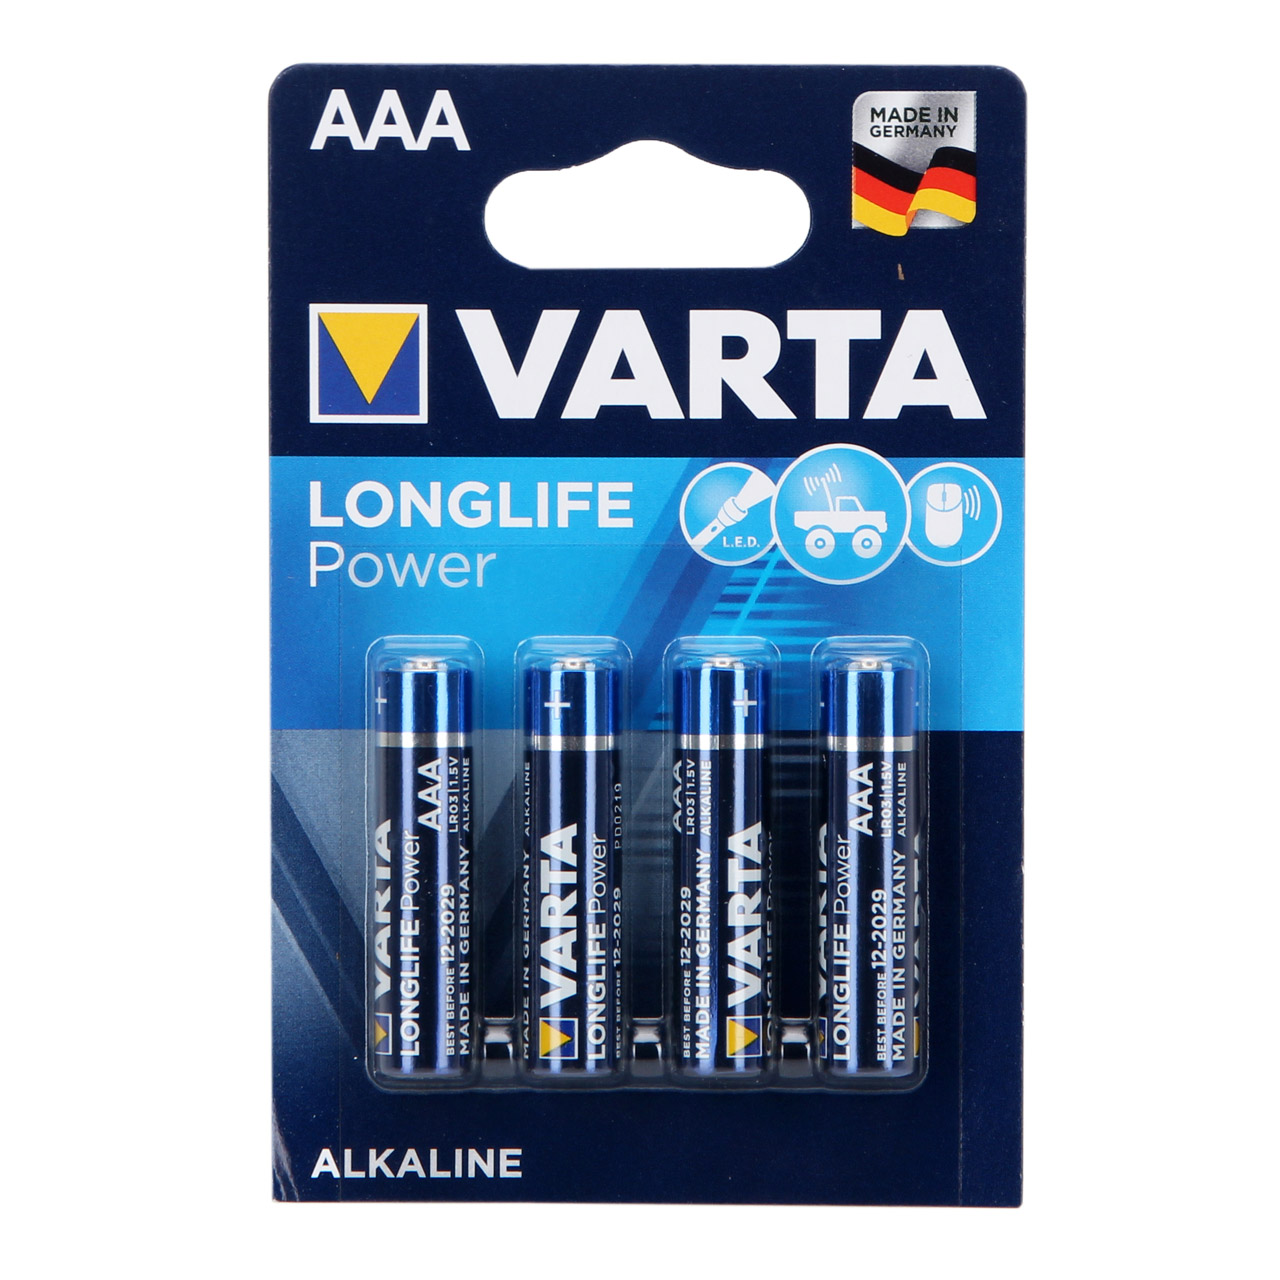 4x VARTA Batterie LONGLIFE POWER Alkaline AAA LR03 Micro 1,5V